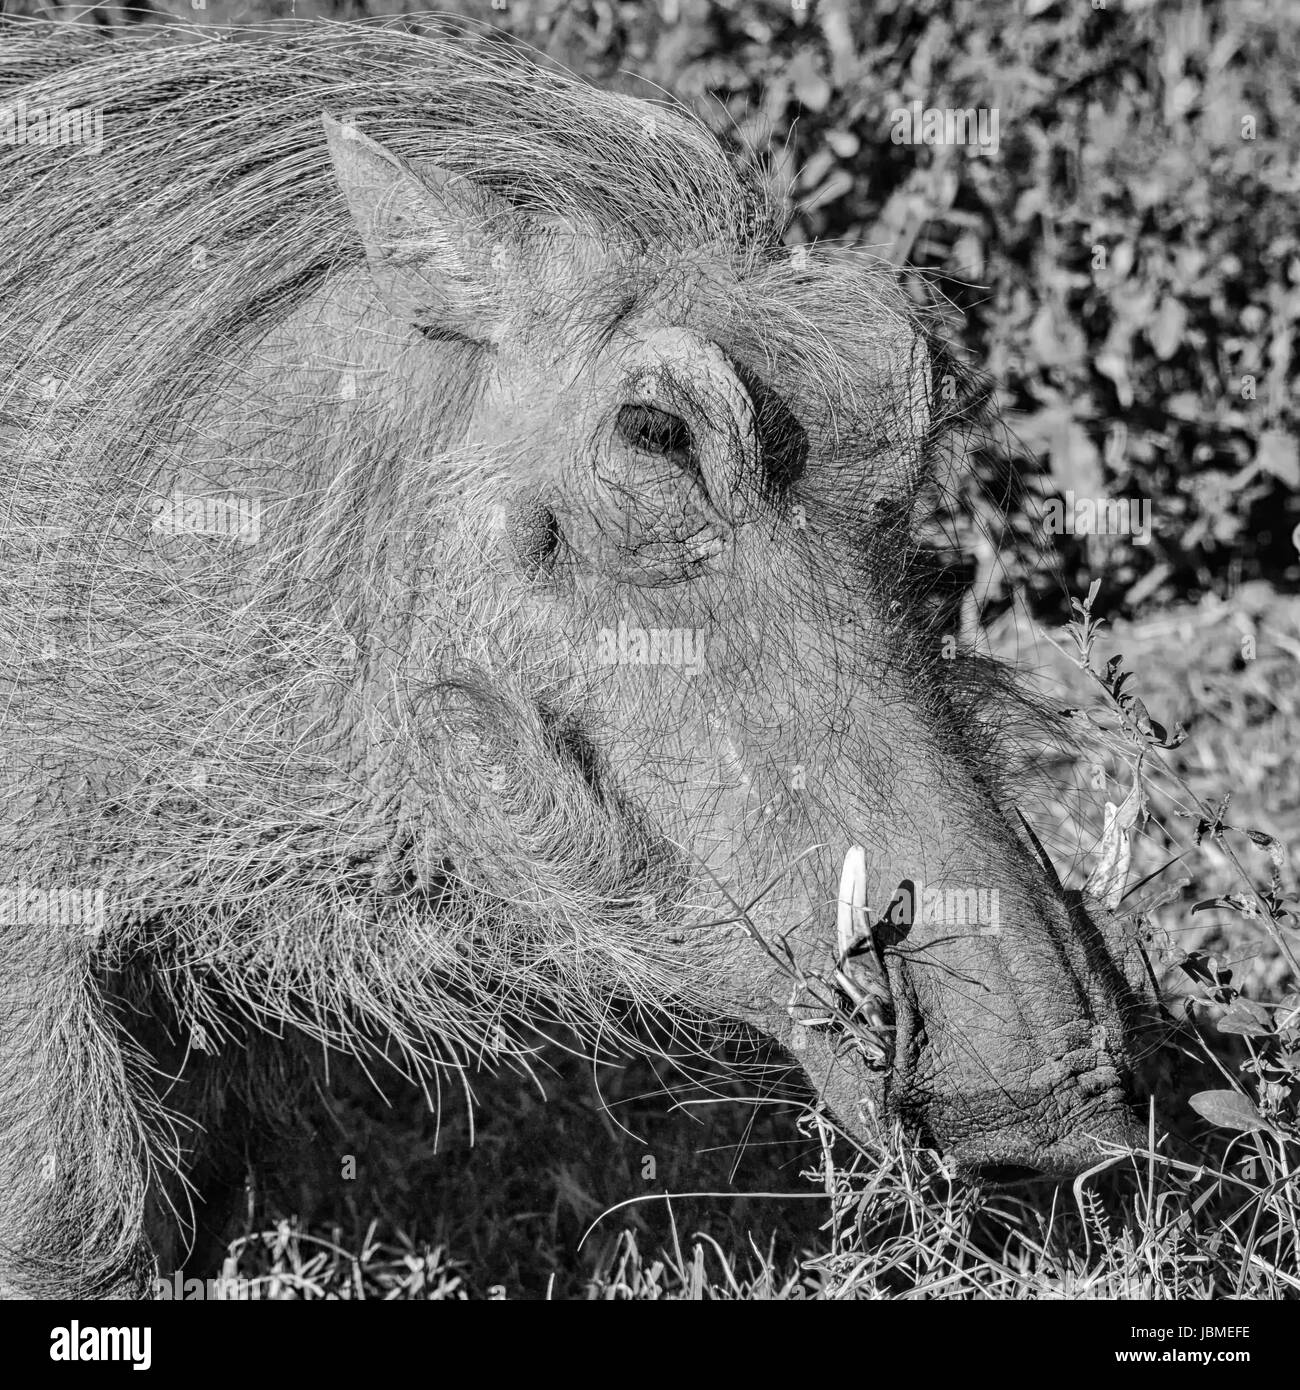 Warthog in Southern African savanna Stock Photo